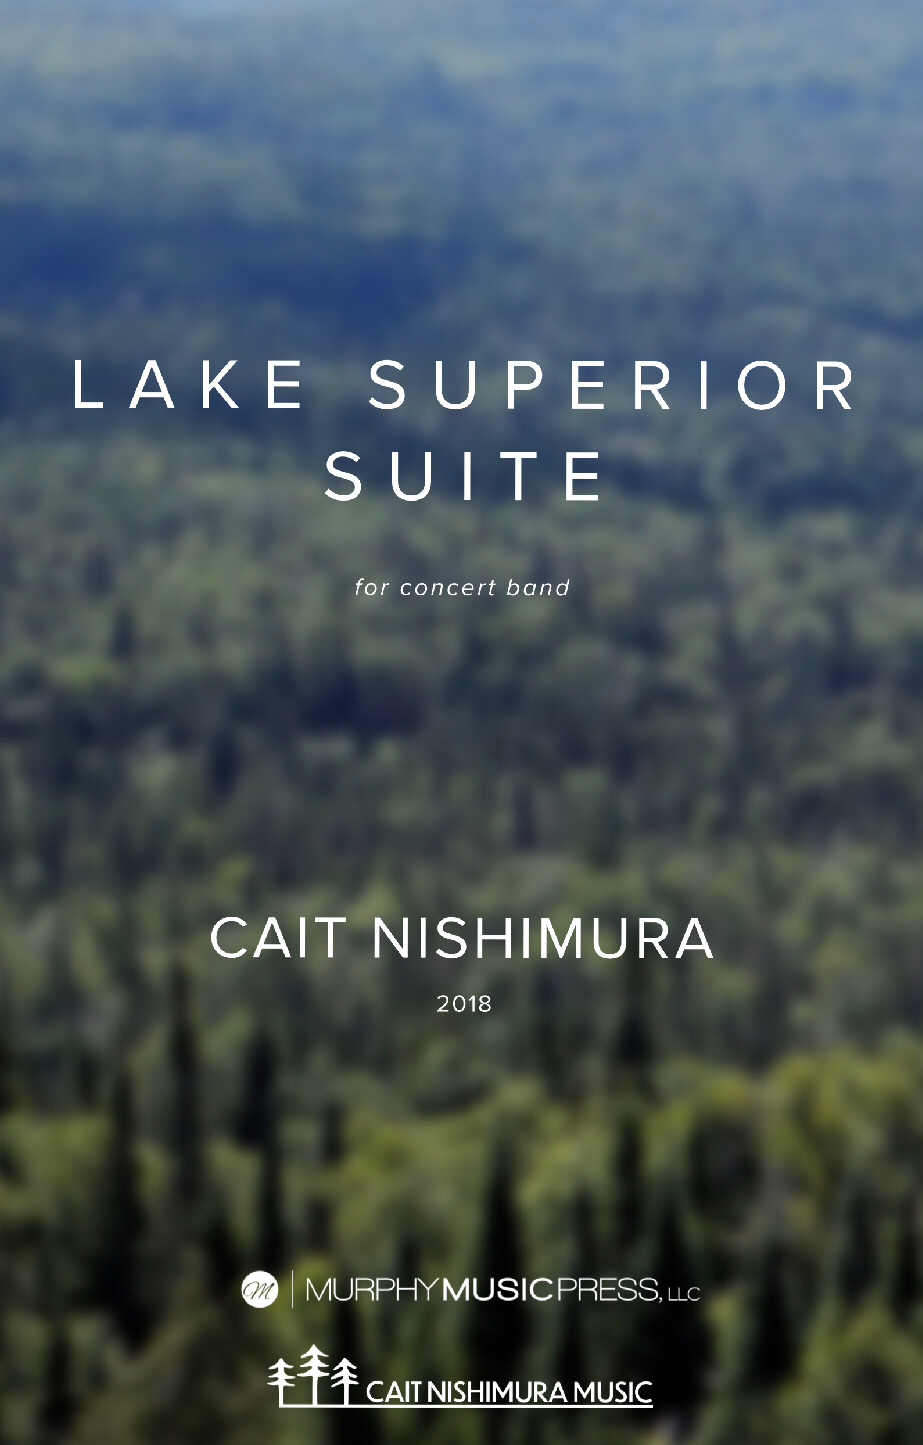 Lake Superior Suite by Cait Nishimura